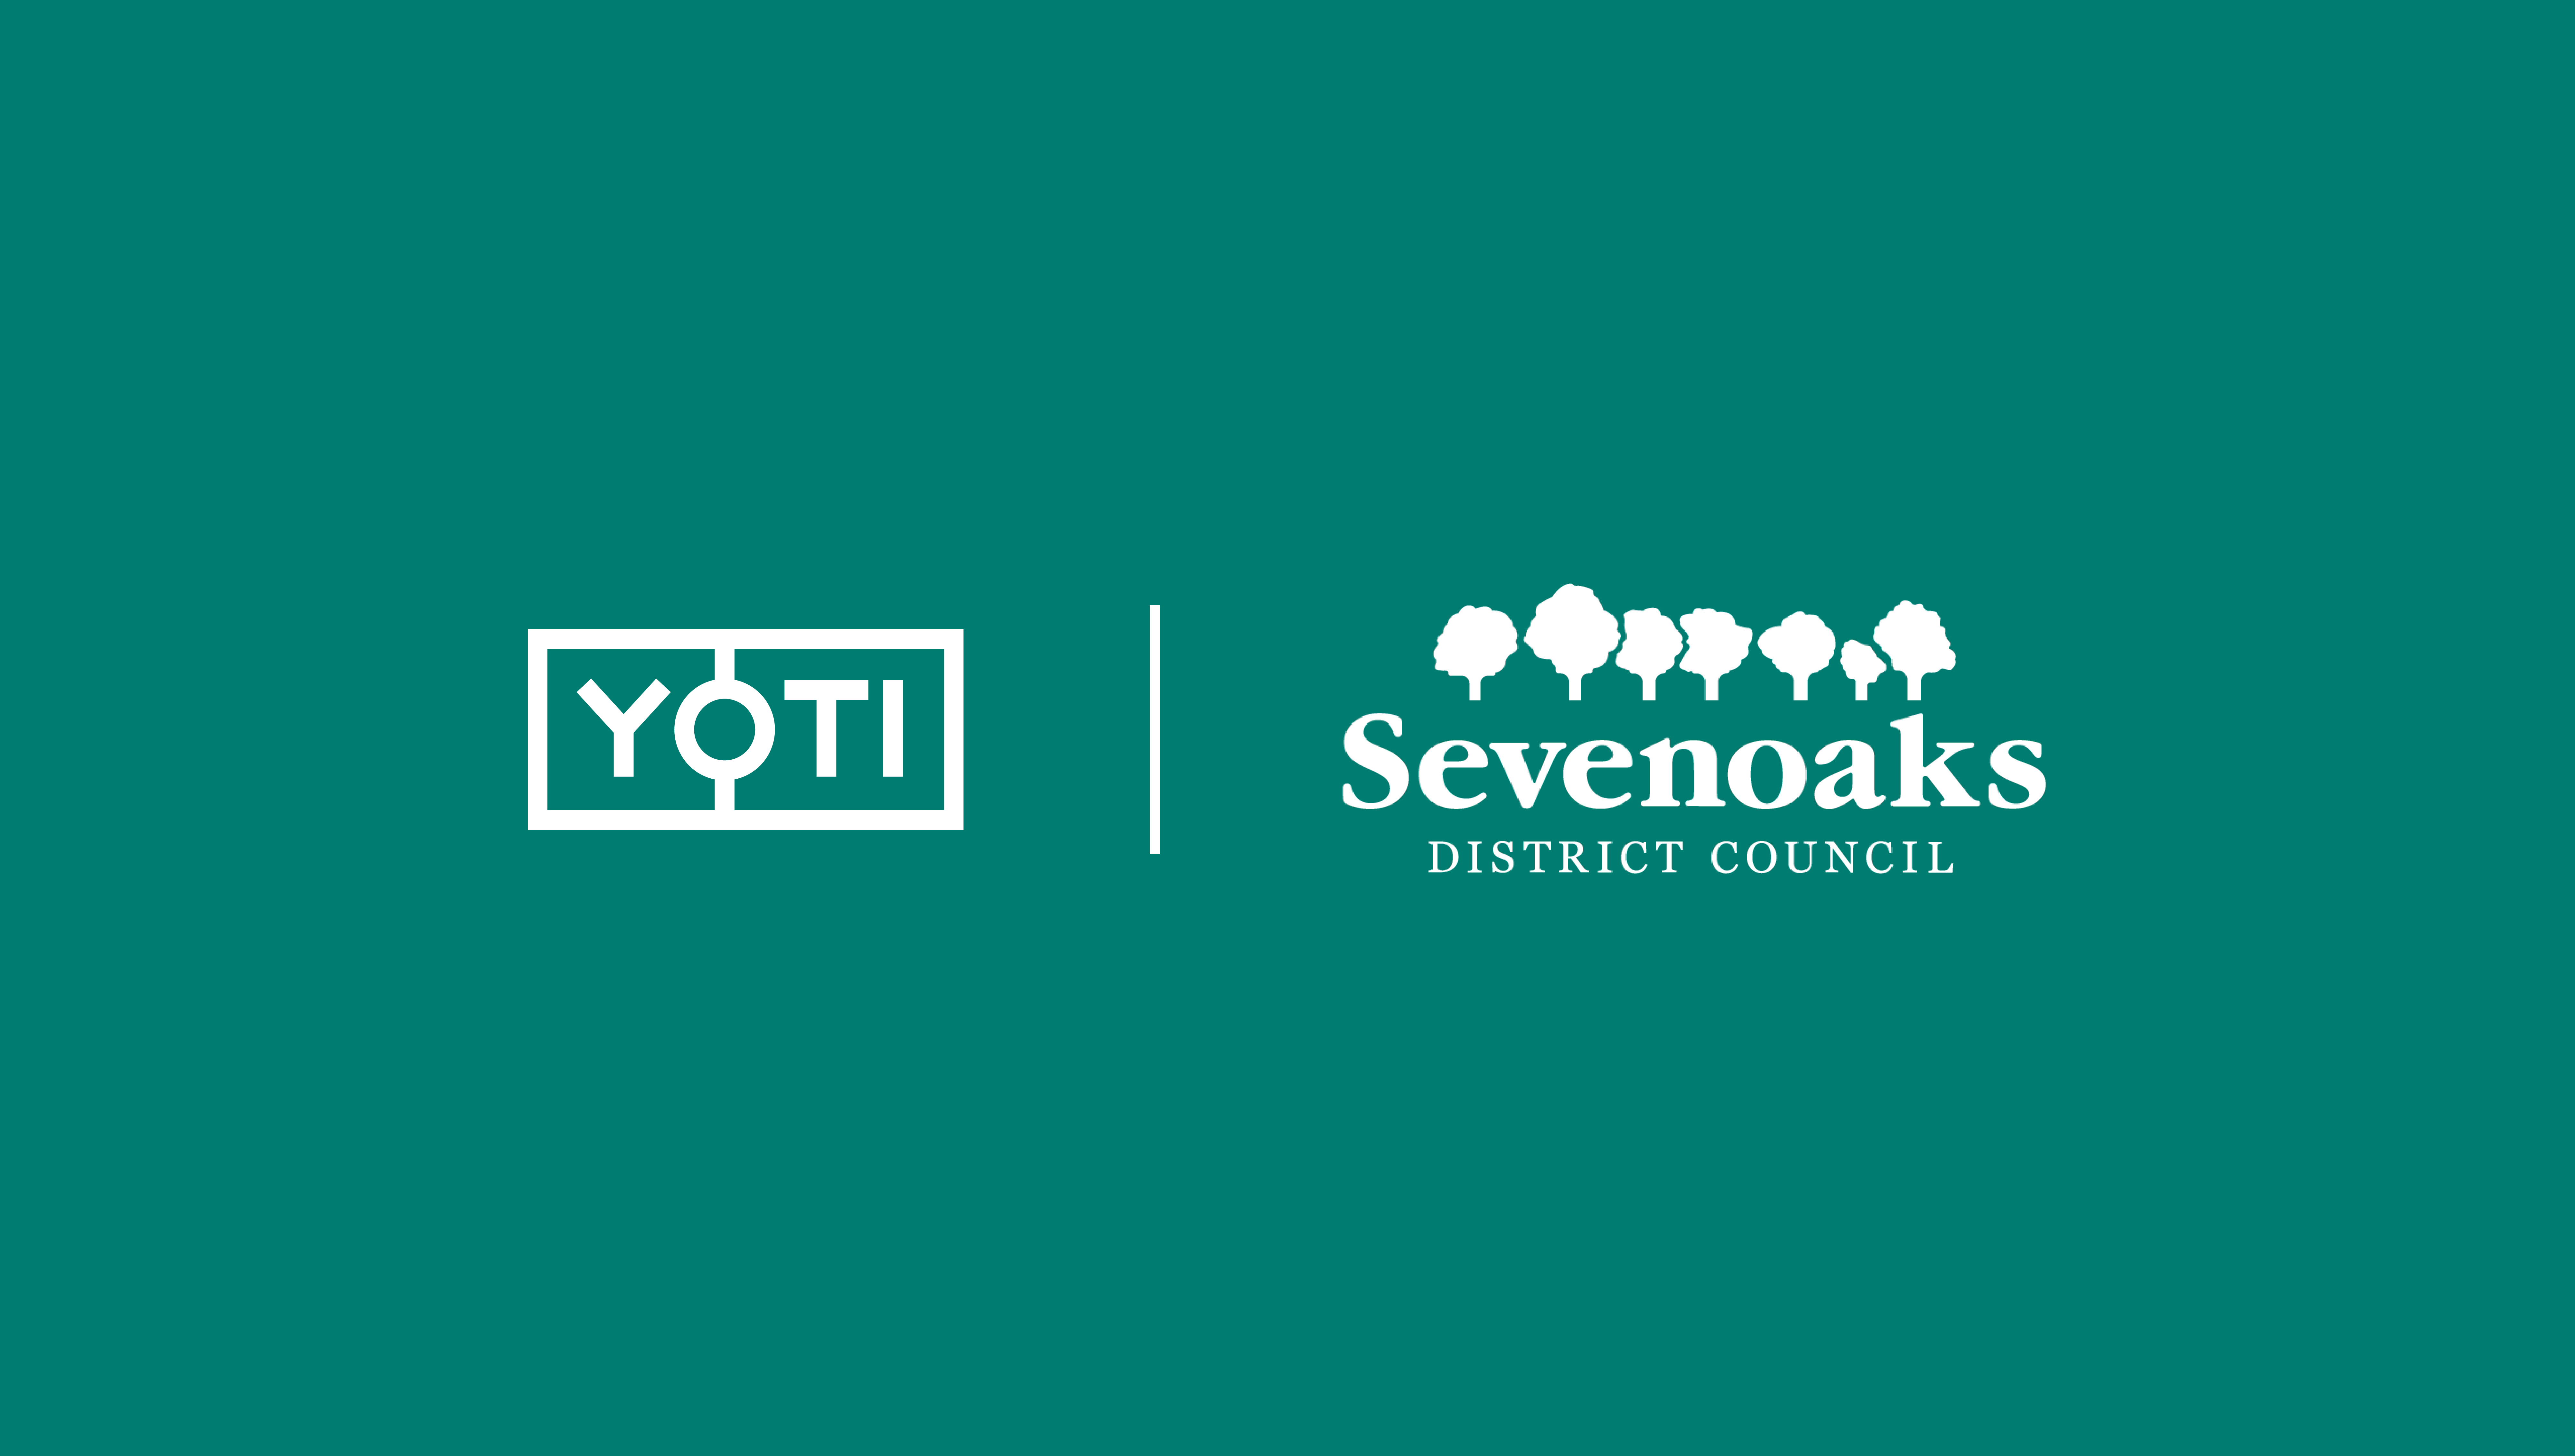 Yoti and SevenOaks logos presented together